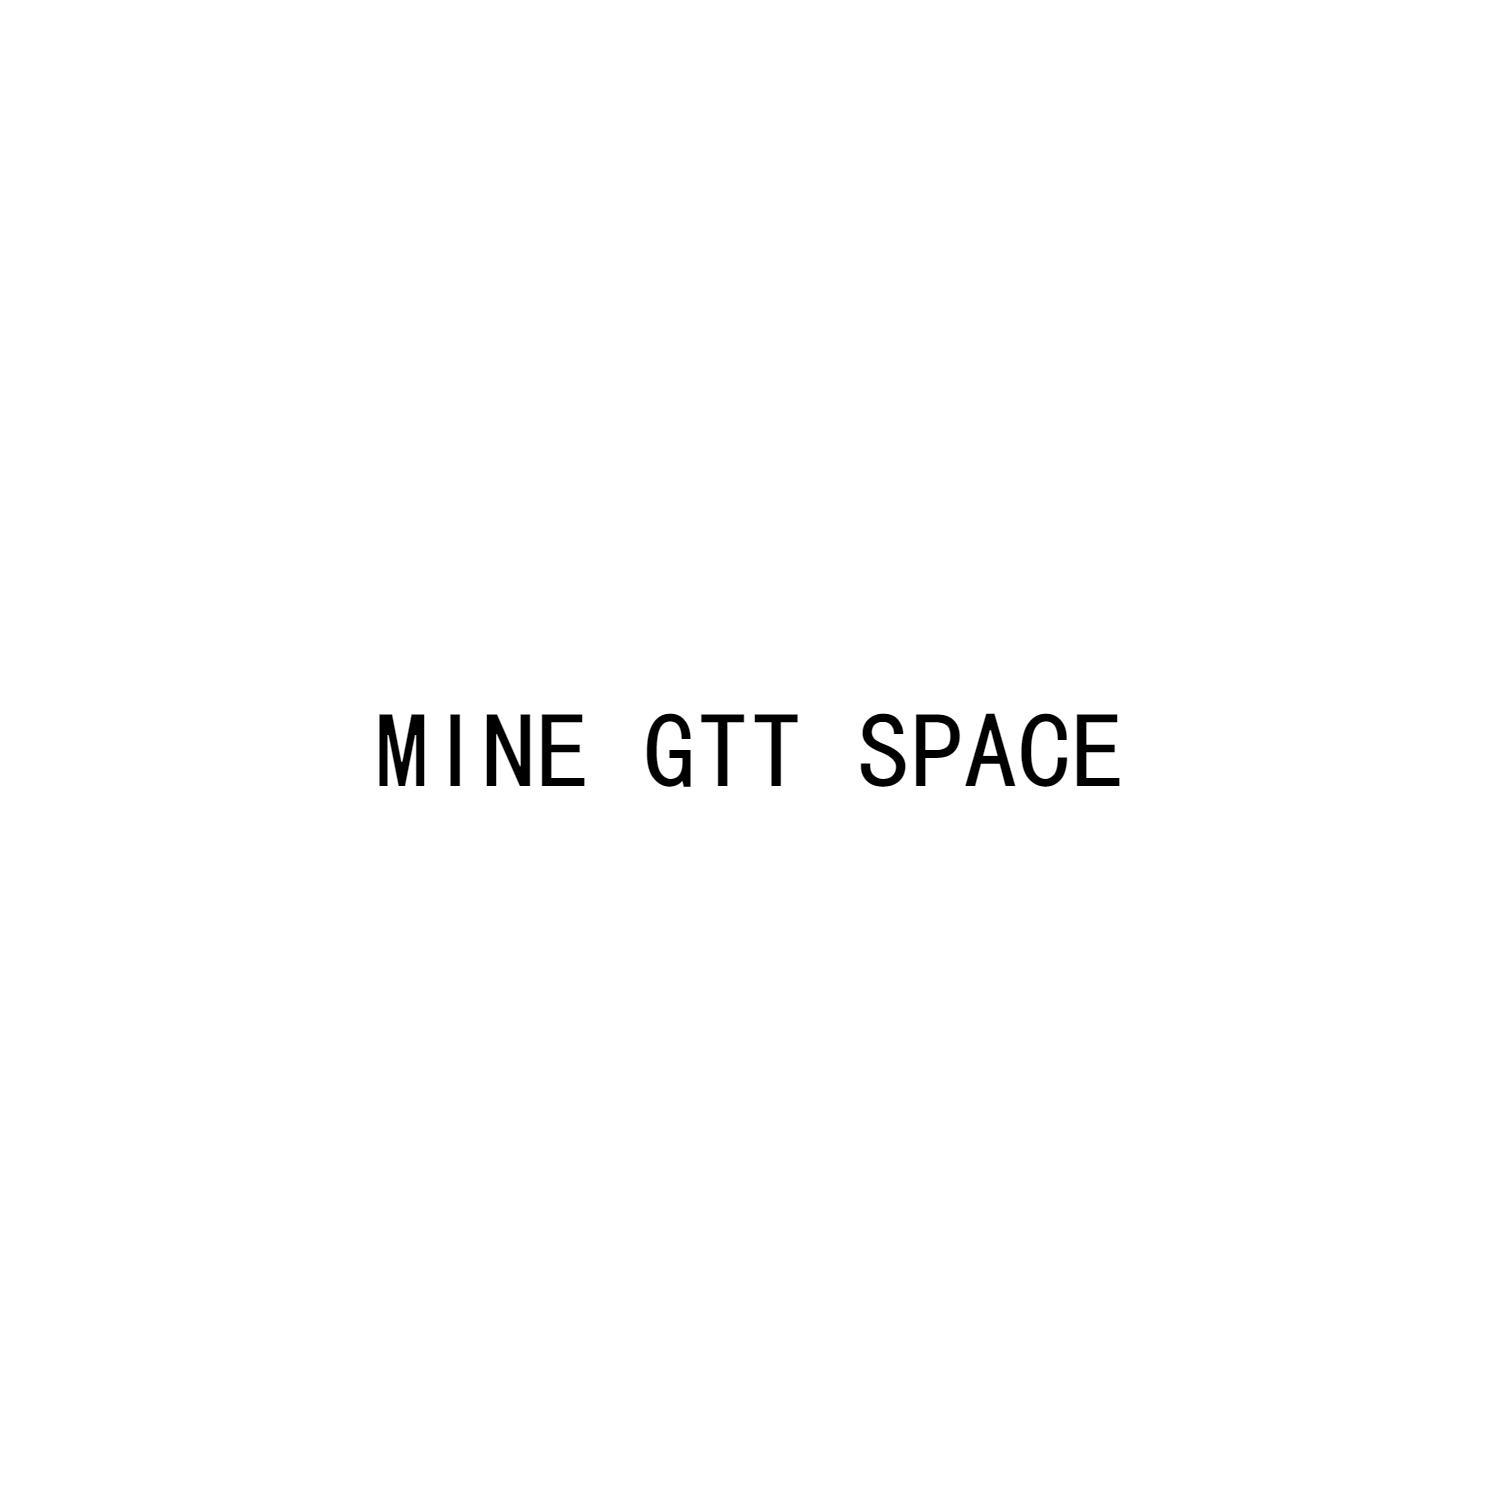 MINE GTT SPACE